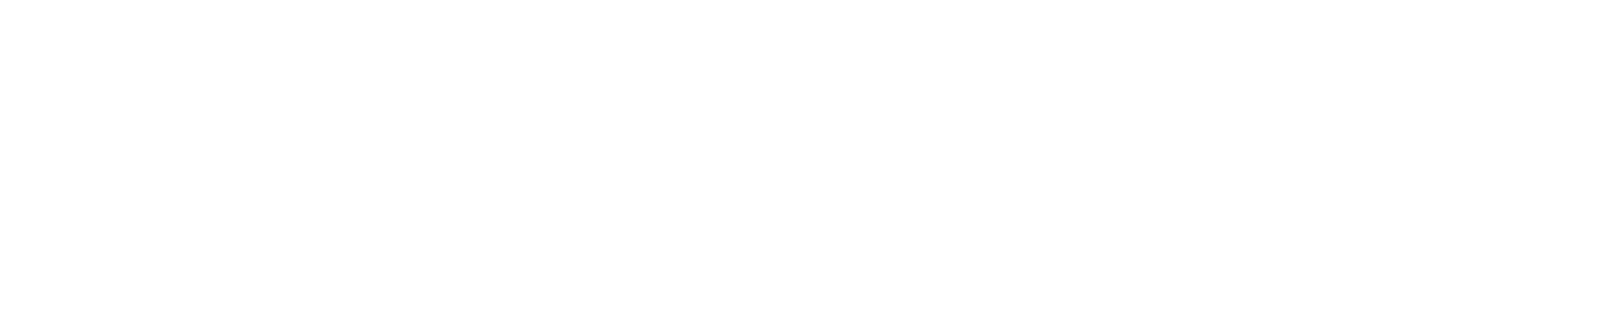 Credit Mutuel logo monochrome2